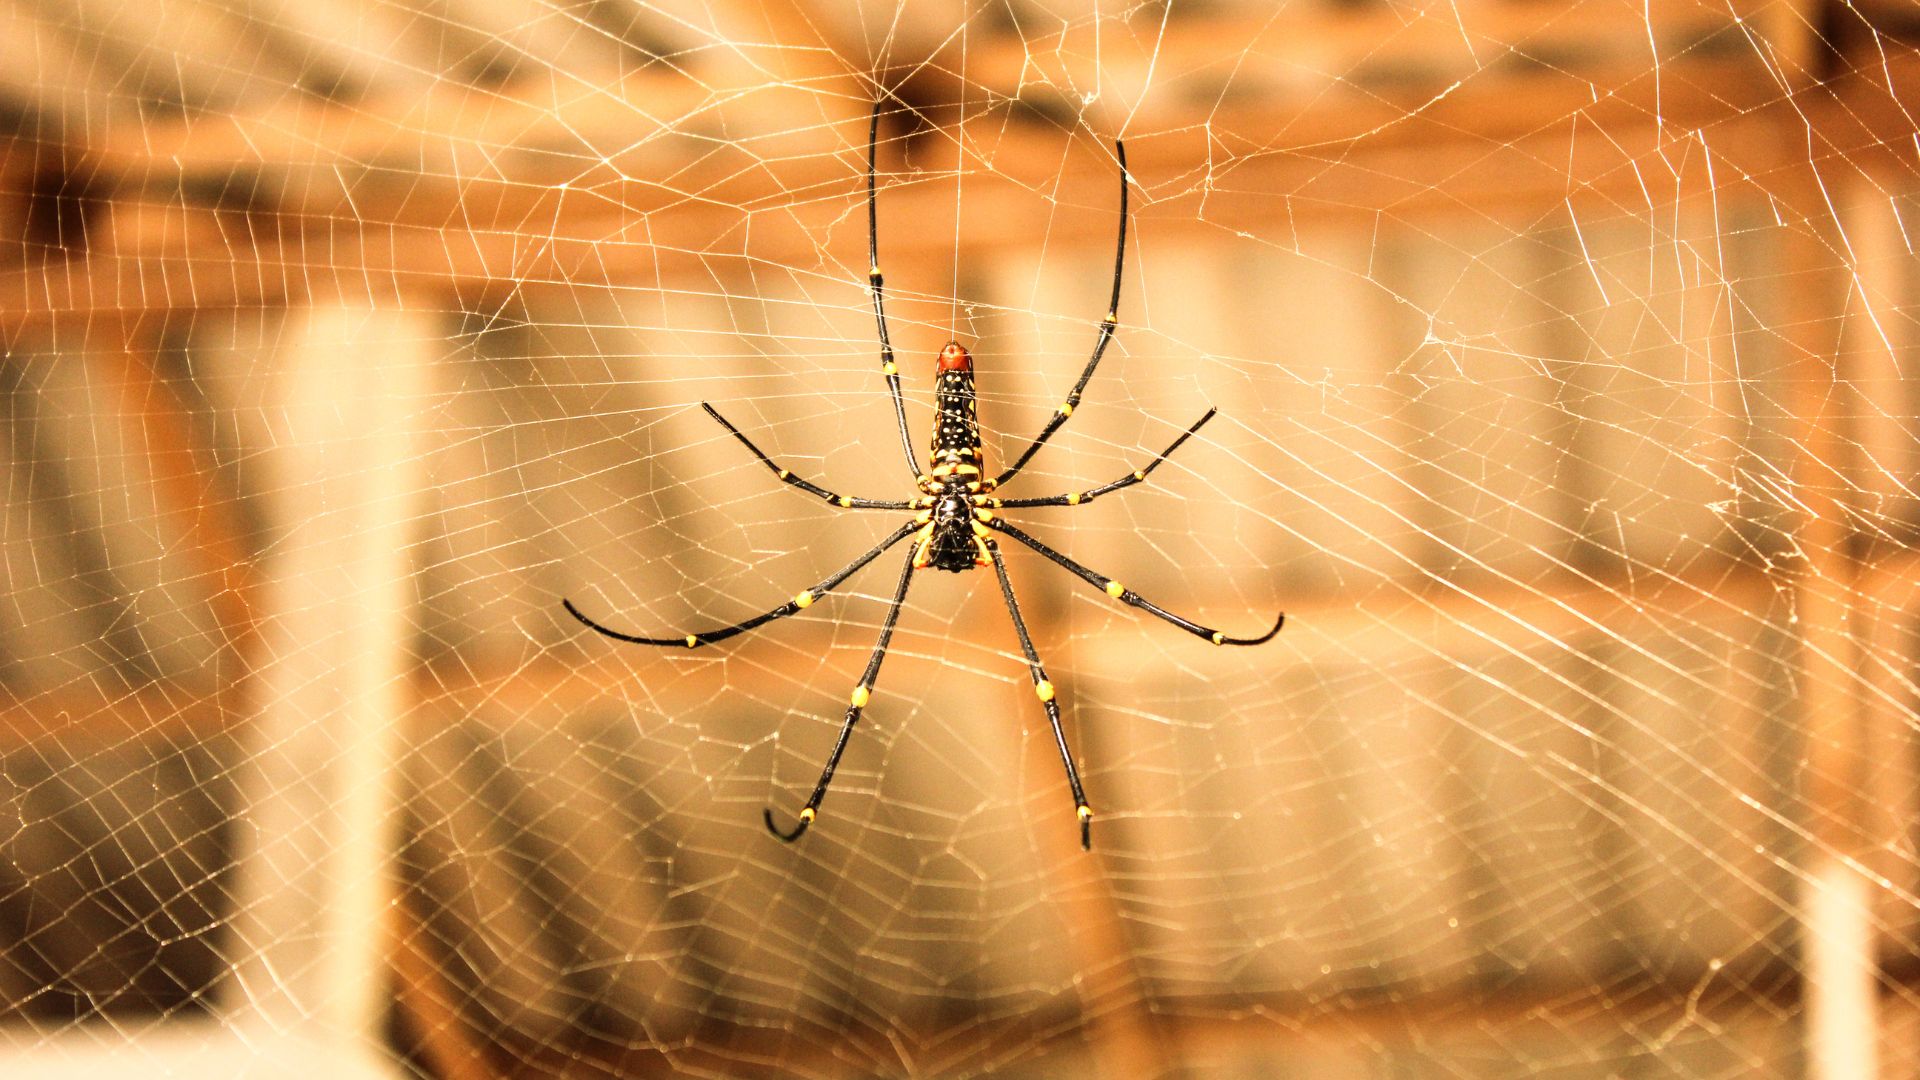 Spider Control – Banishing Eight-Legged Intruders